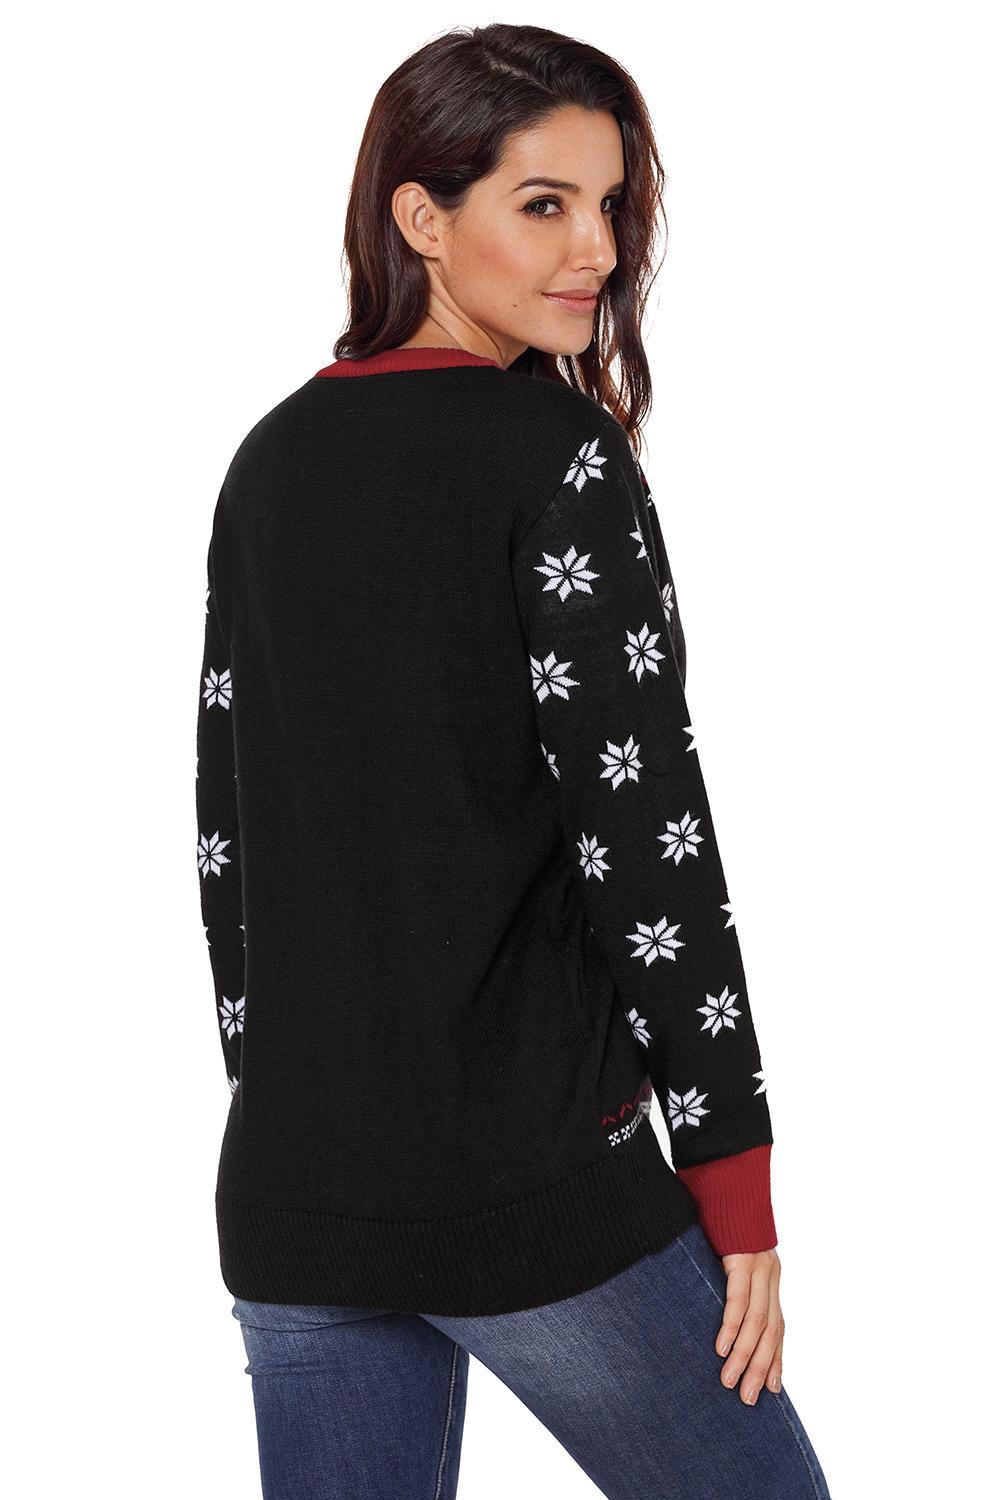 santa print crewneck sweater